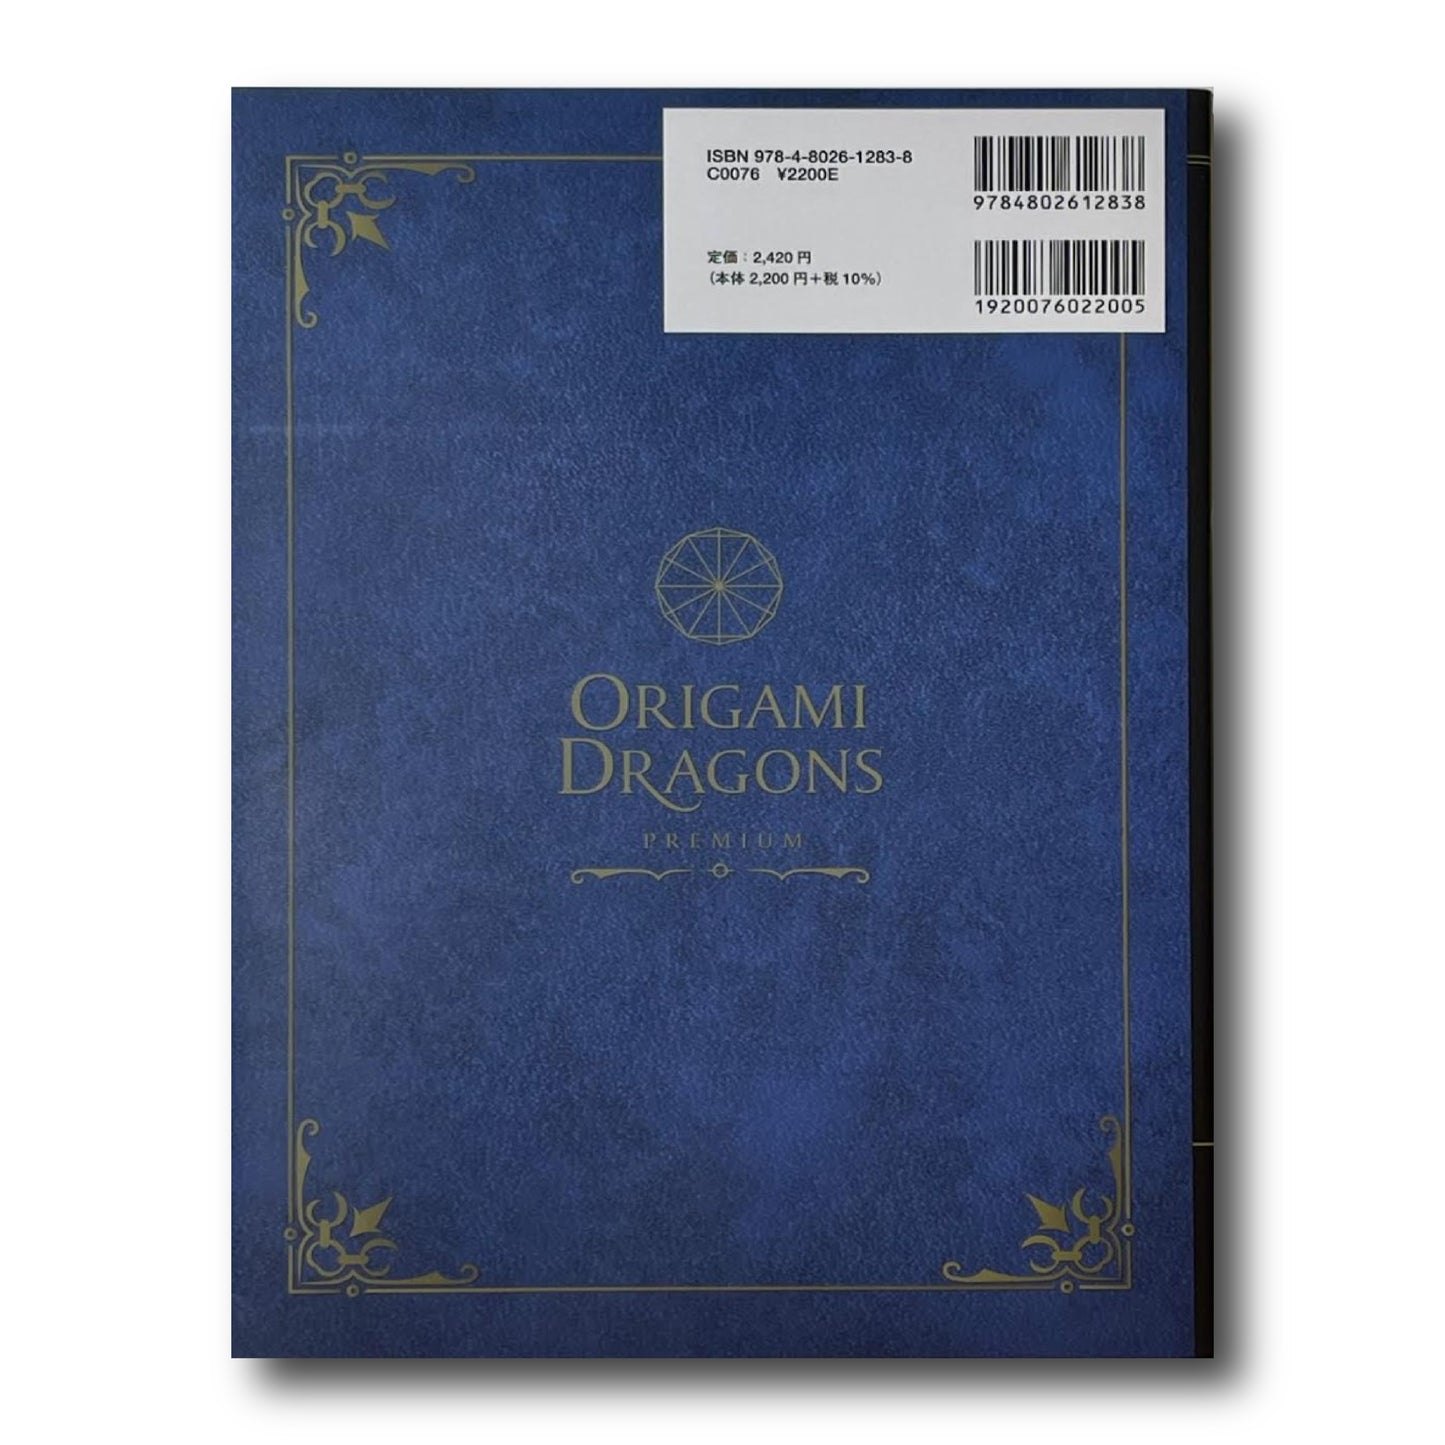 Origami Dragons Premium/折り紙ドラゴンズプレミアム